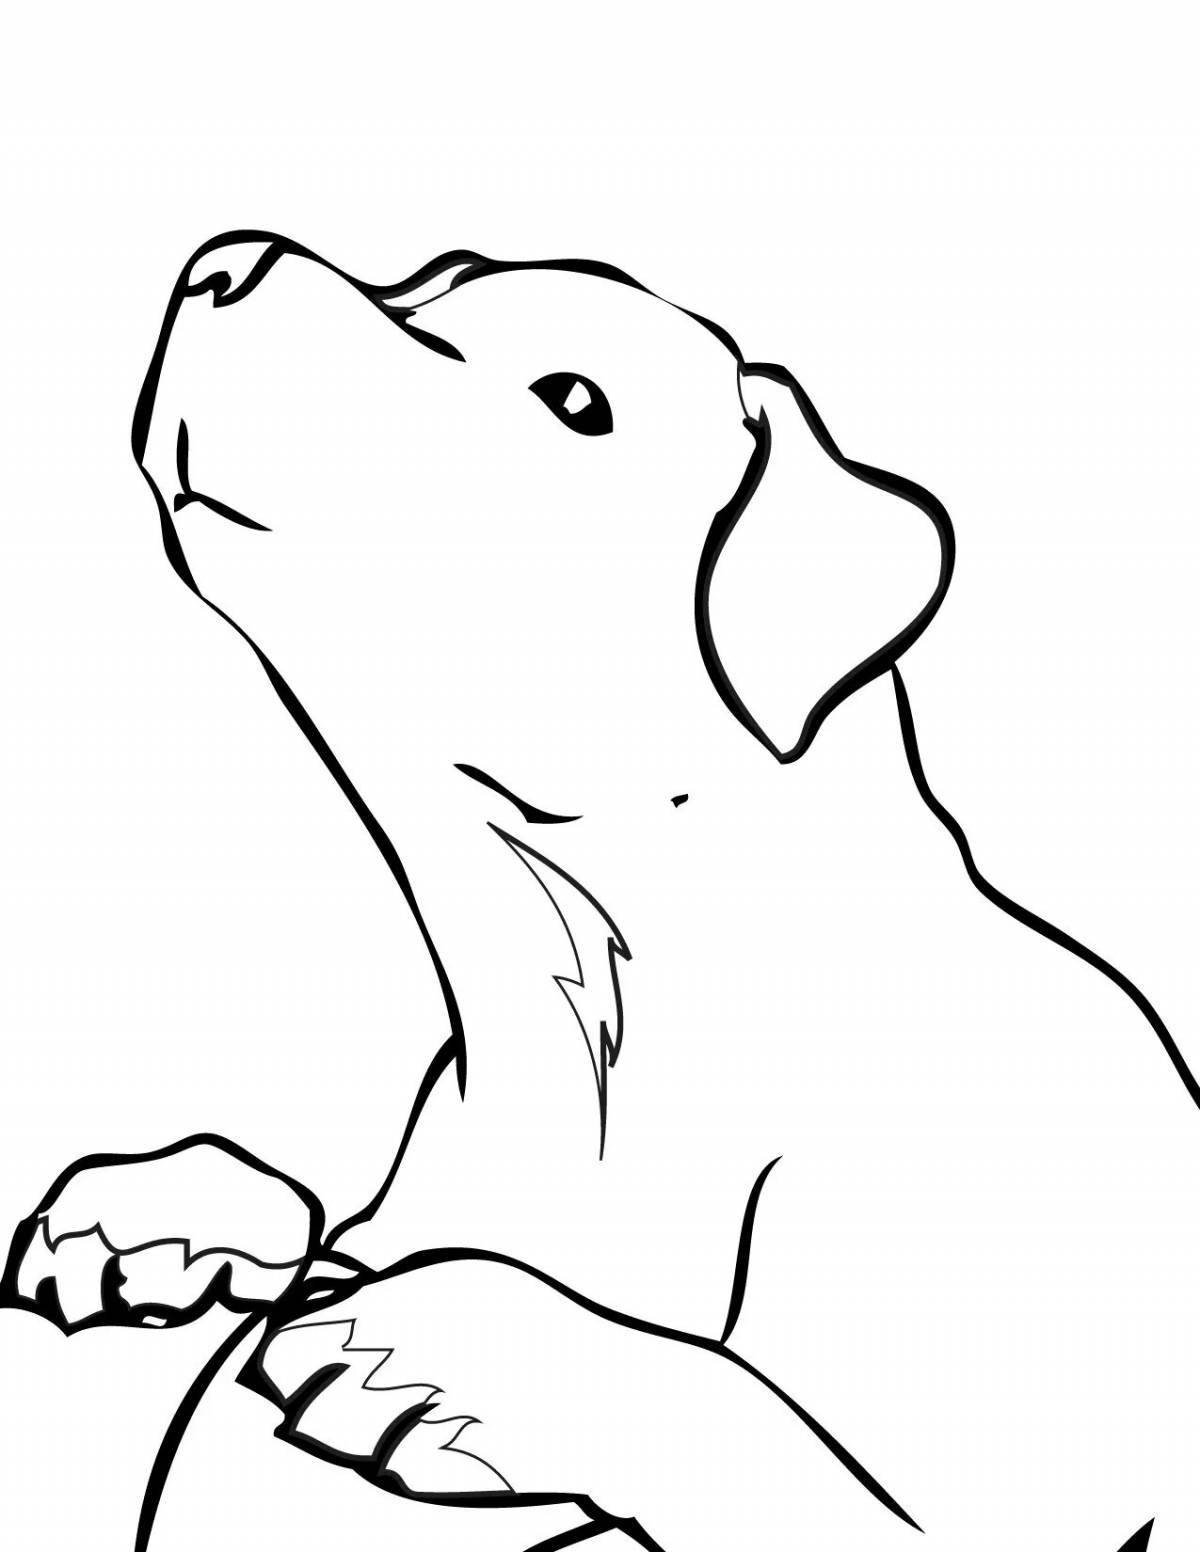 Live Labrador puppy coloring book